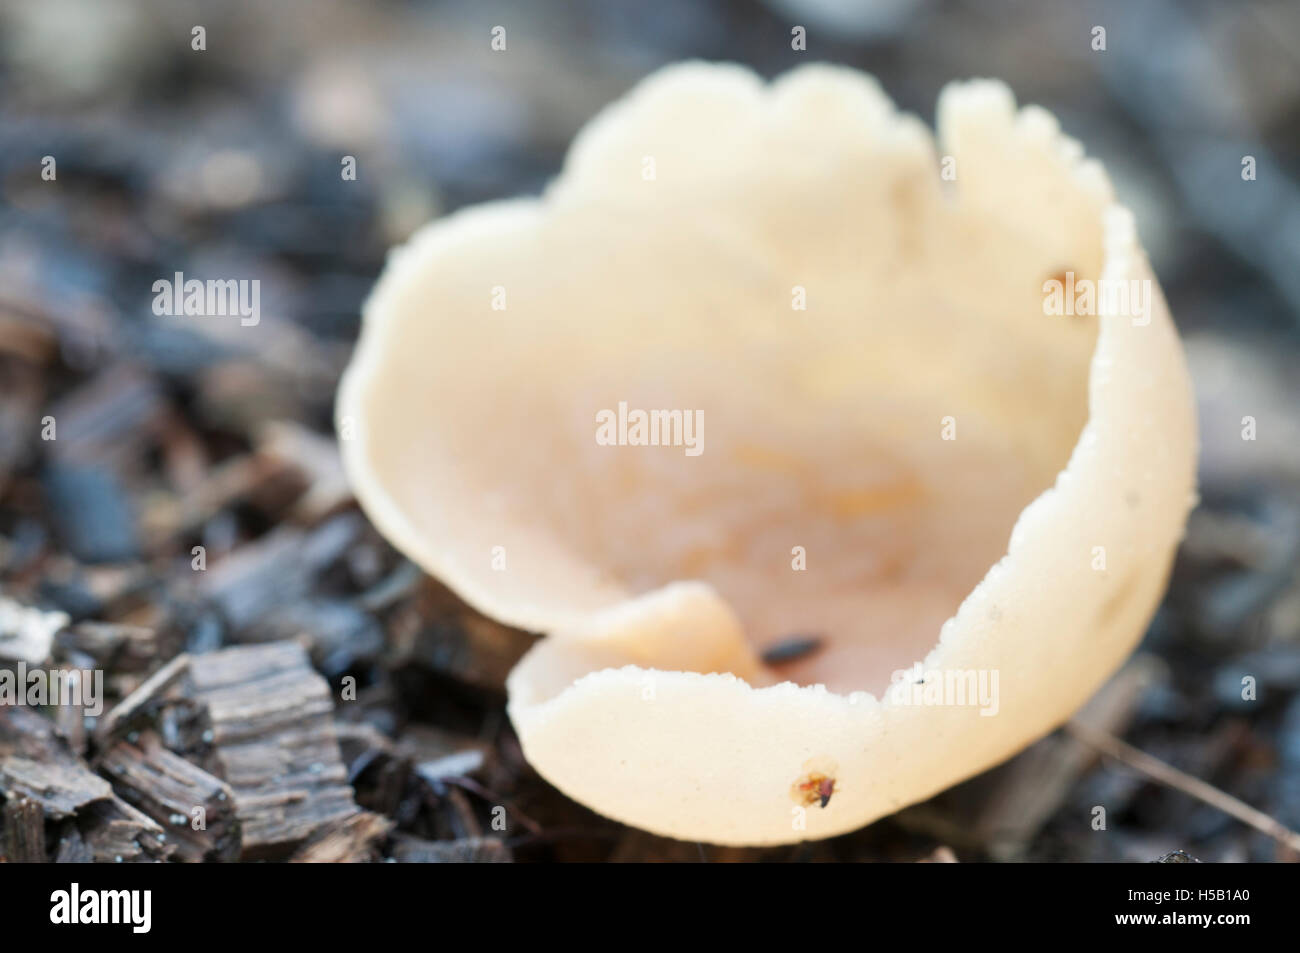 Peziza varia ascomycete fungus, close up shot, local focus Stock Photo